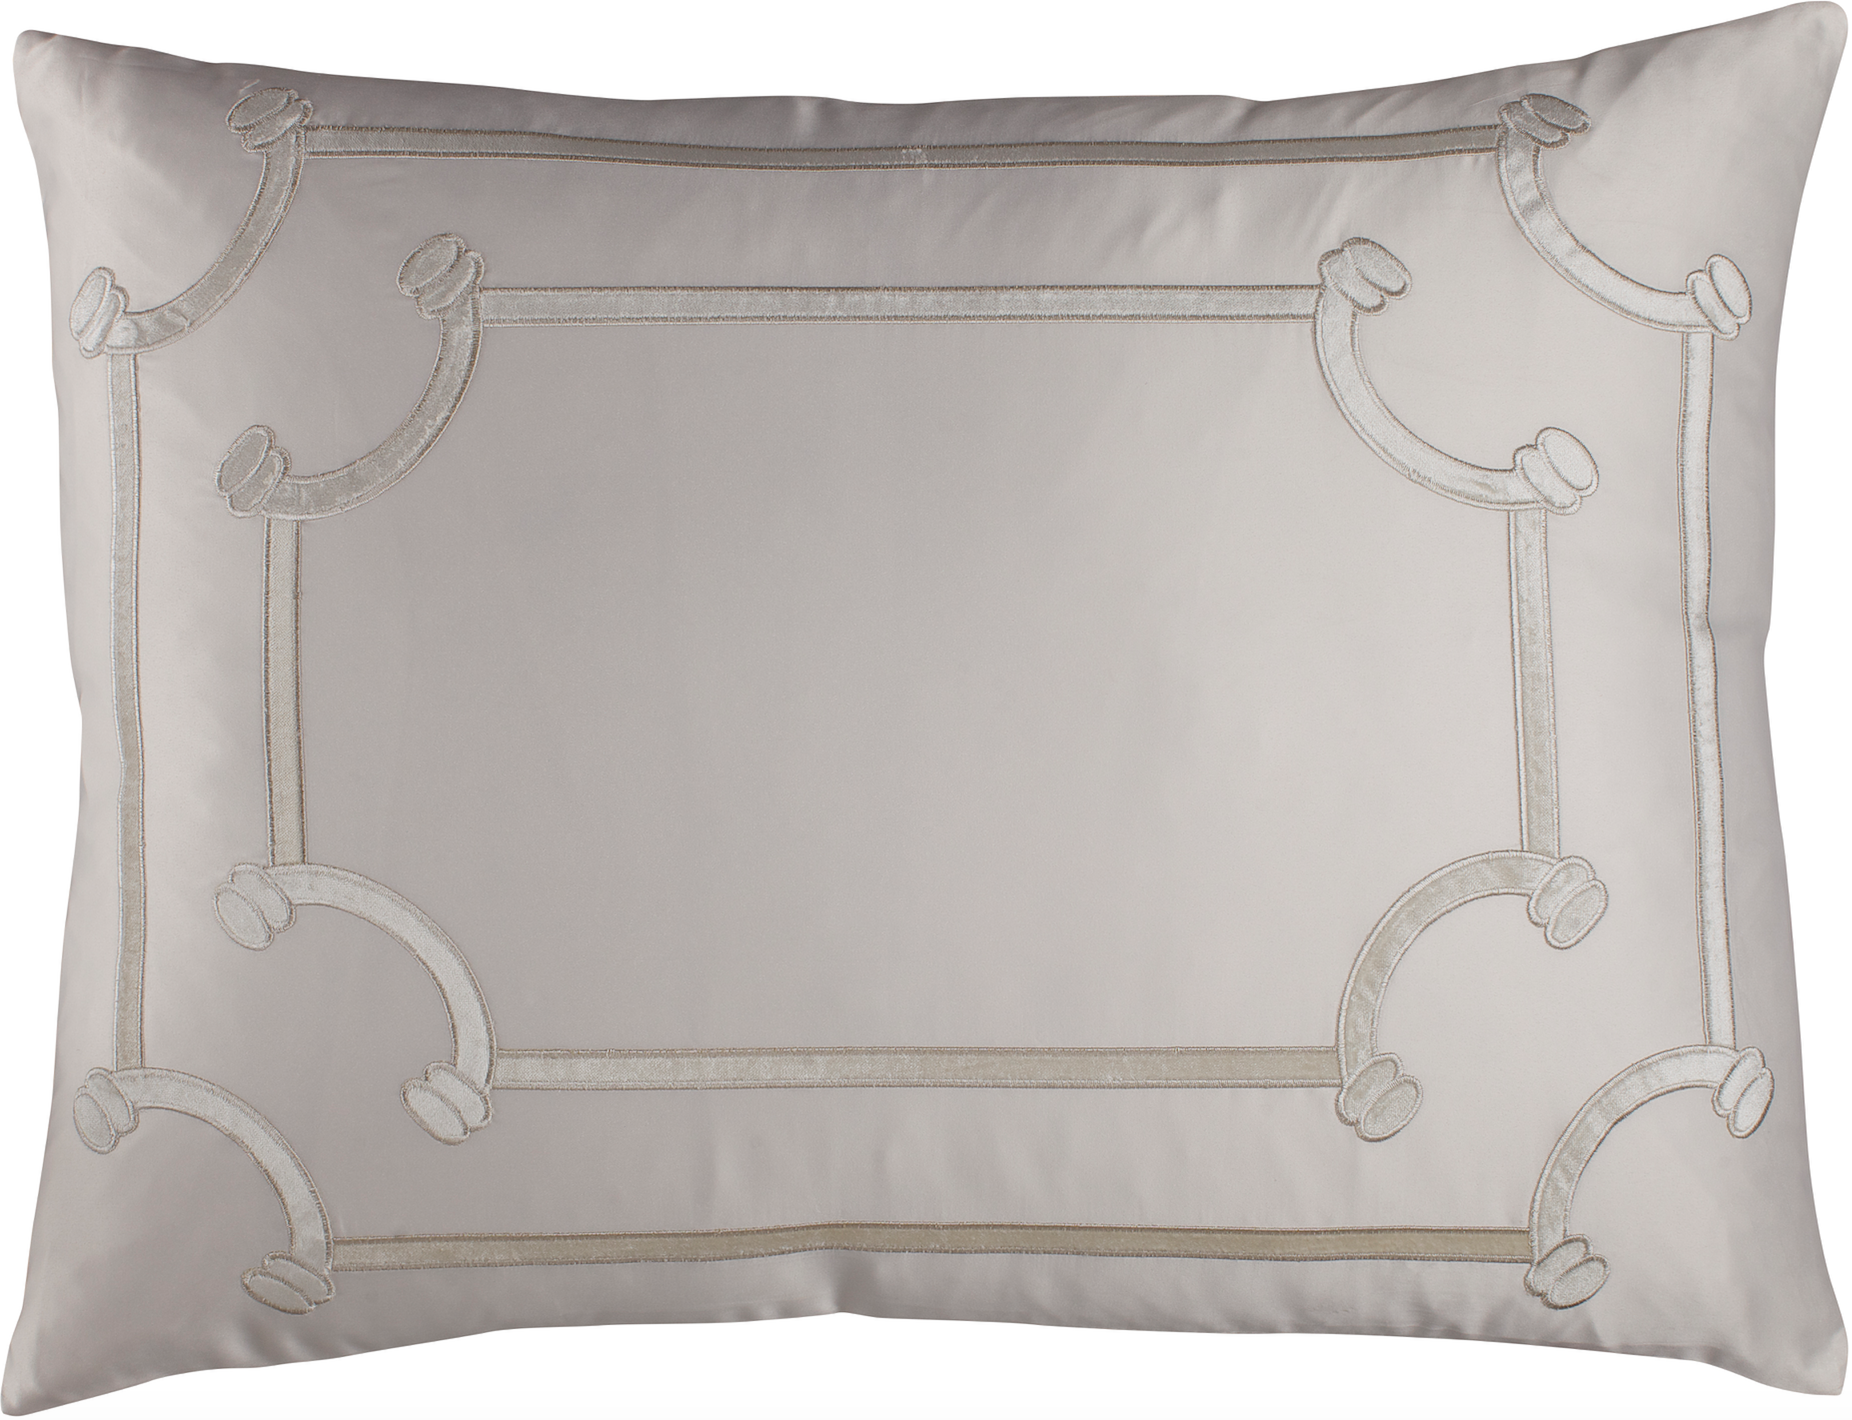 Lili Alessandra Vendome Ivory Standard Pillow